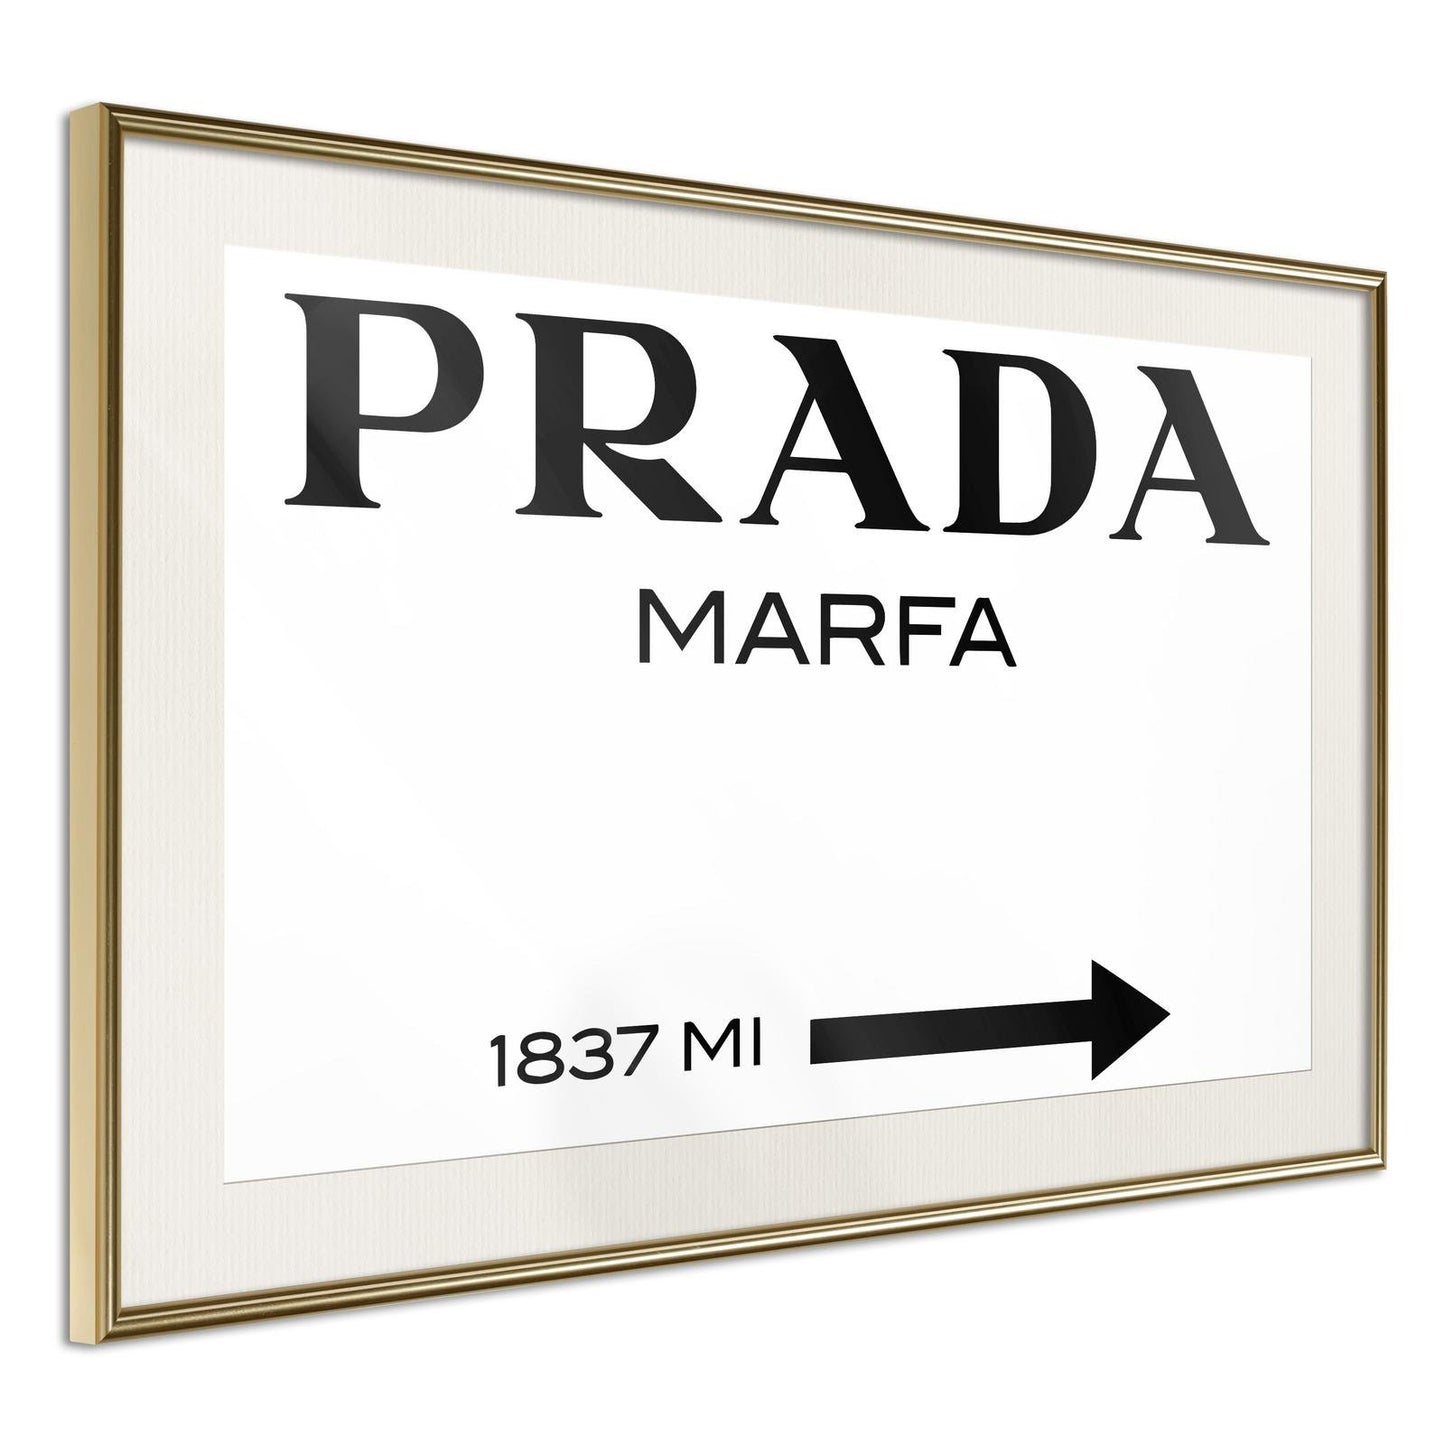 Prada (White)